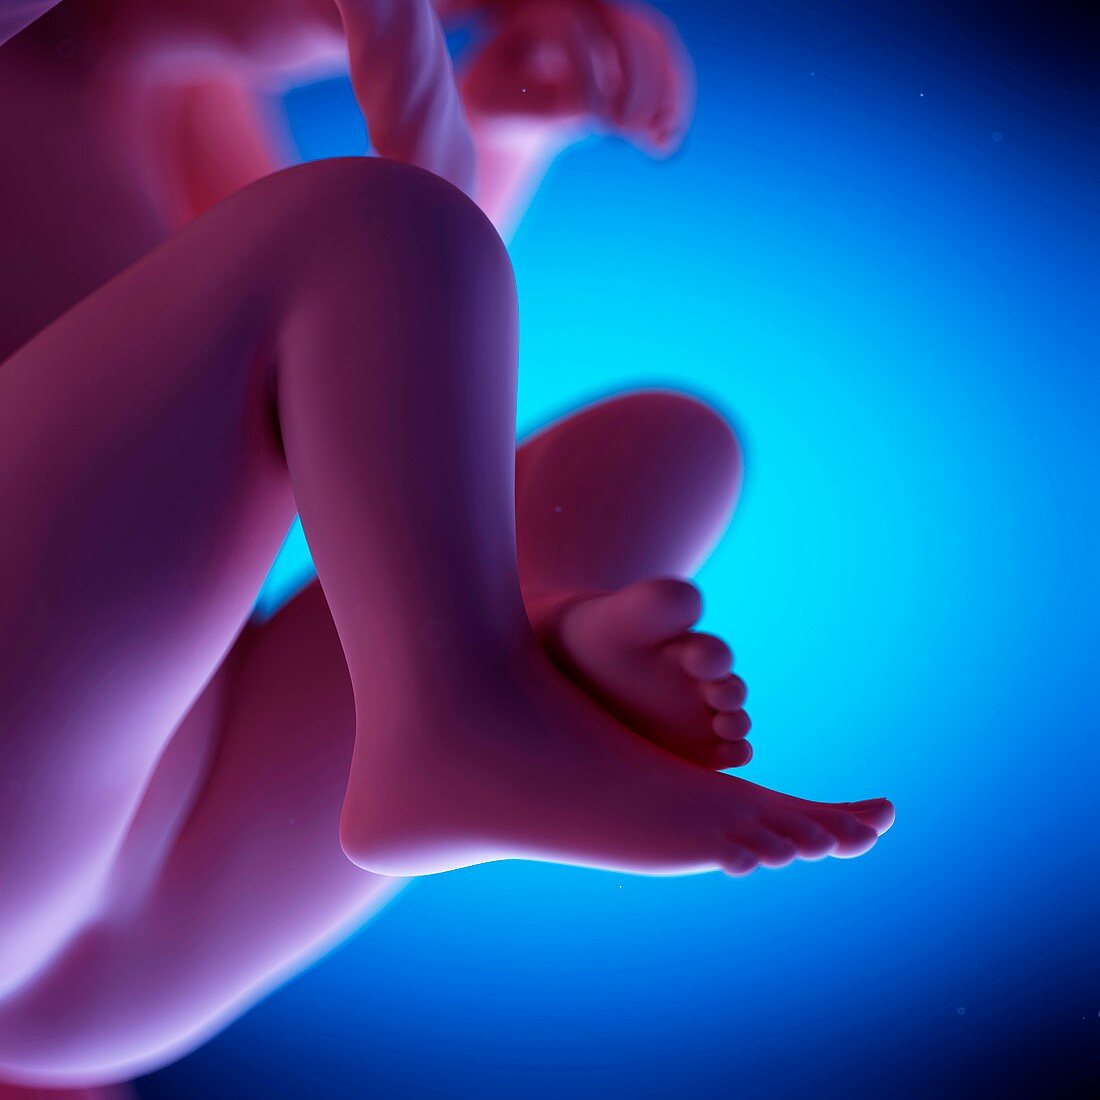 Human fetus at week 19 of gestation, illustration